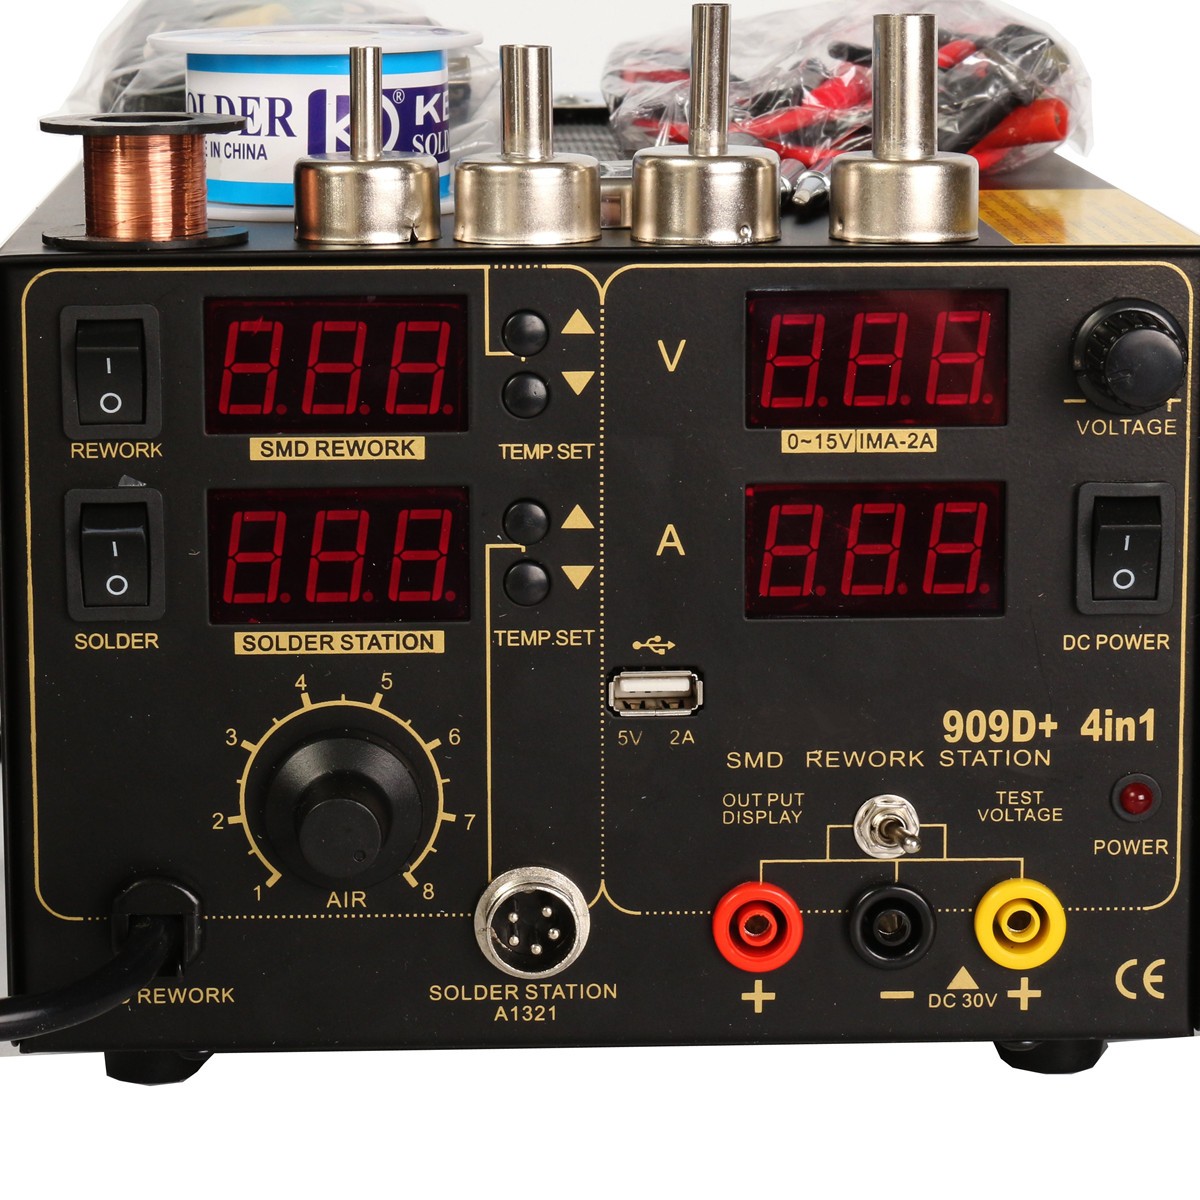 Saike-220V-909D-Rework-Soldering-Station-Hot-Heat-Air-Nozzle-DC-USB-Power-Supply-220V-AC-EU-Plug-1063967-3